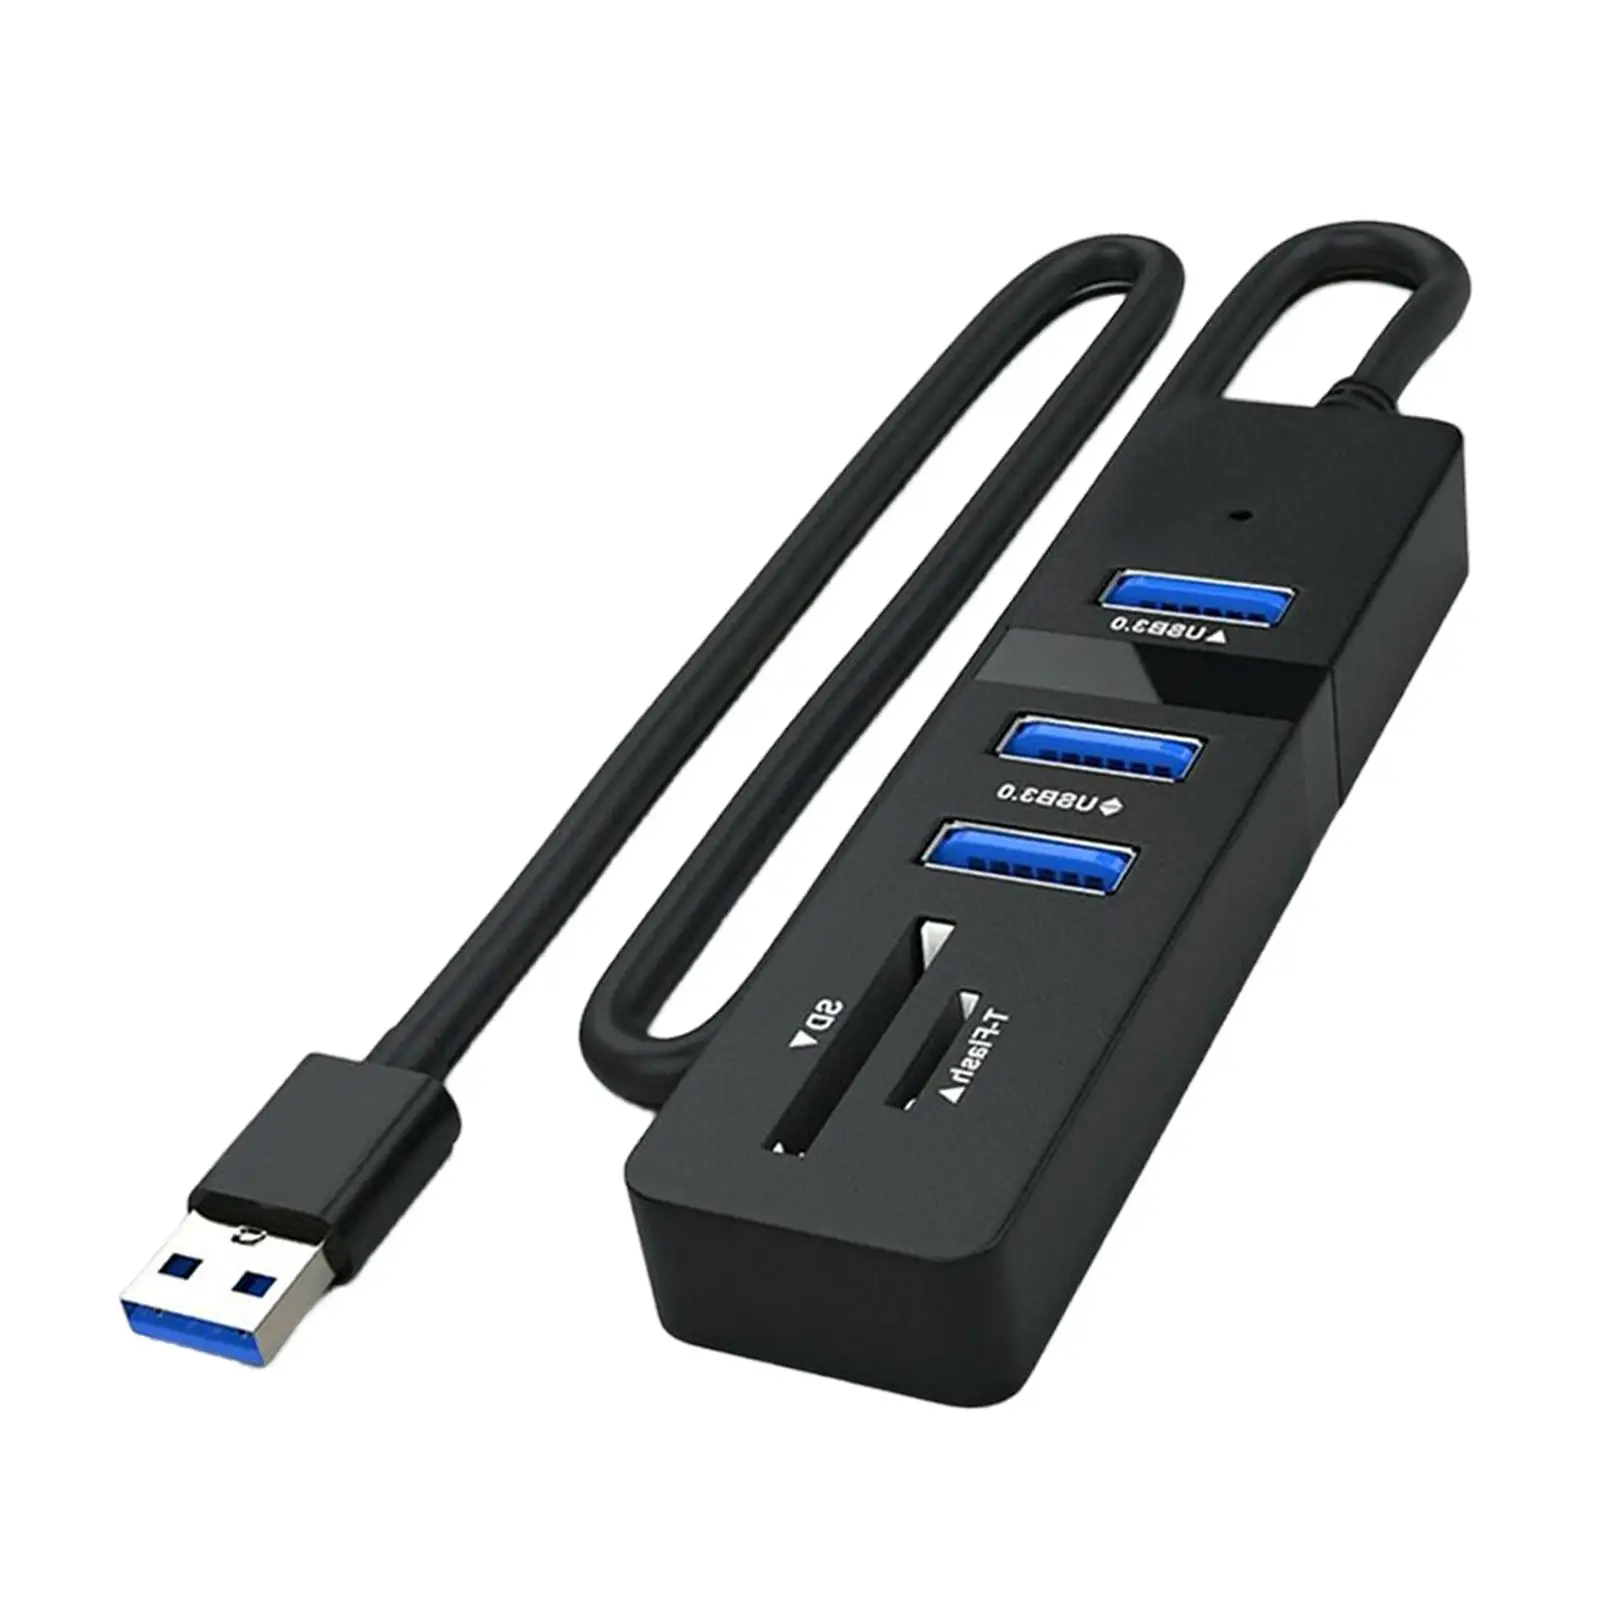 Portable three ports USB 3.0 Hub Compact Expansion Multi Splitter Plug and easy to Set data USB Hub for Computer Desktop